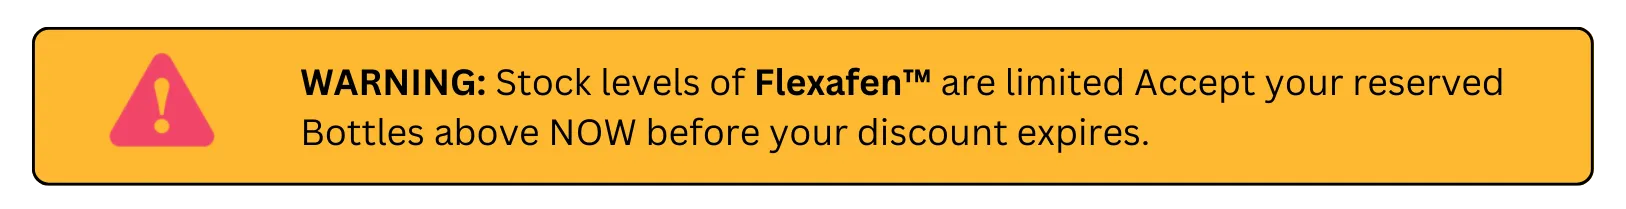 Flexafen Limited Stock Warning